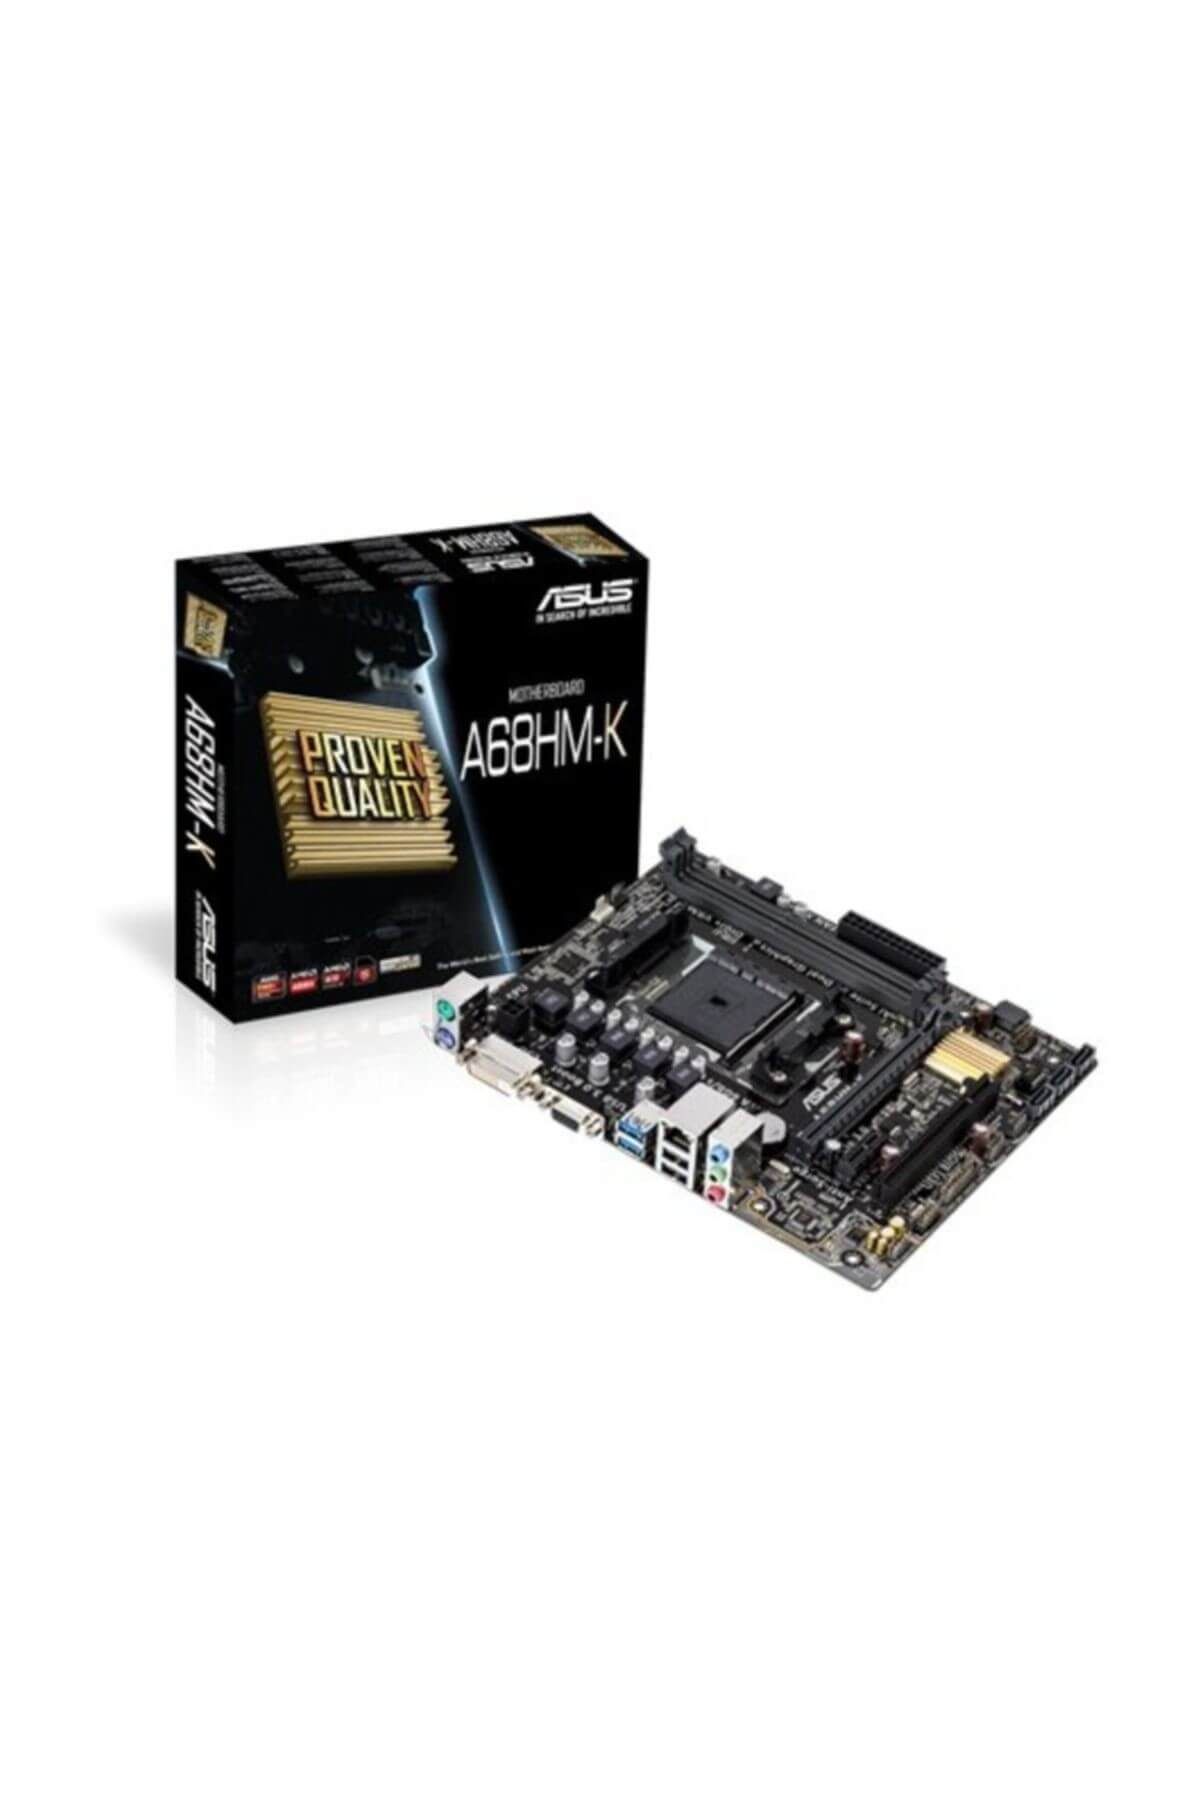 ASUS A68HM-K FM2+ DDR3 SES GLAN VGA SATA3 USB3.0 ATX